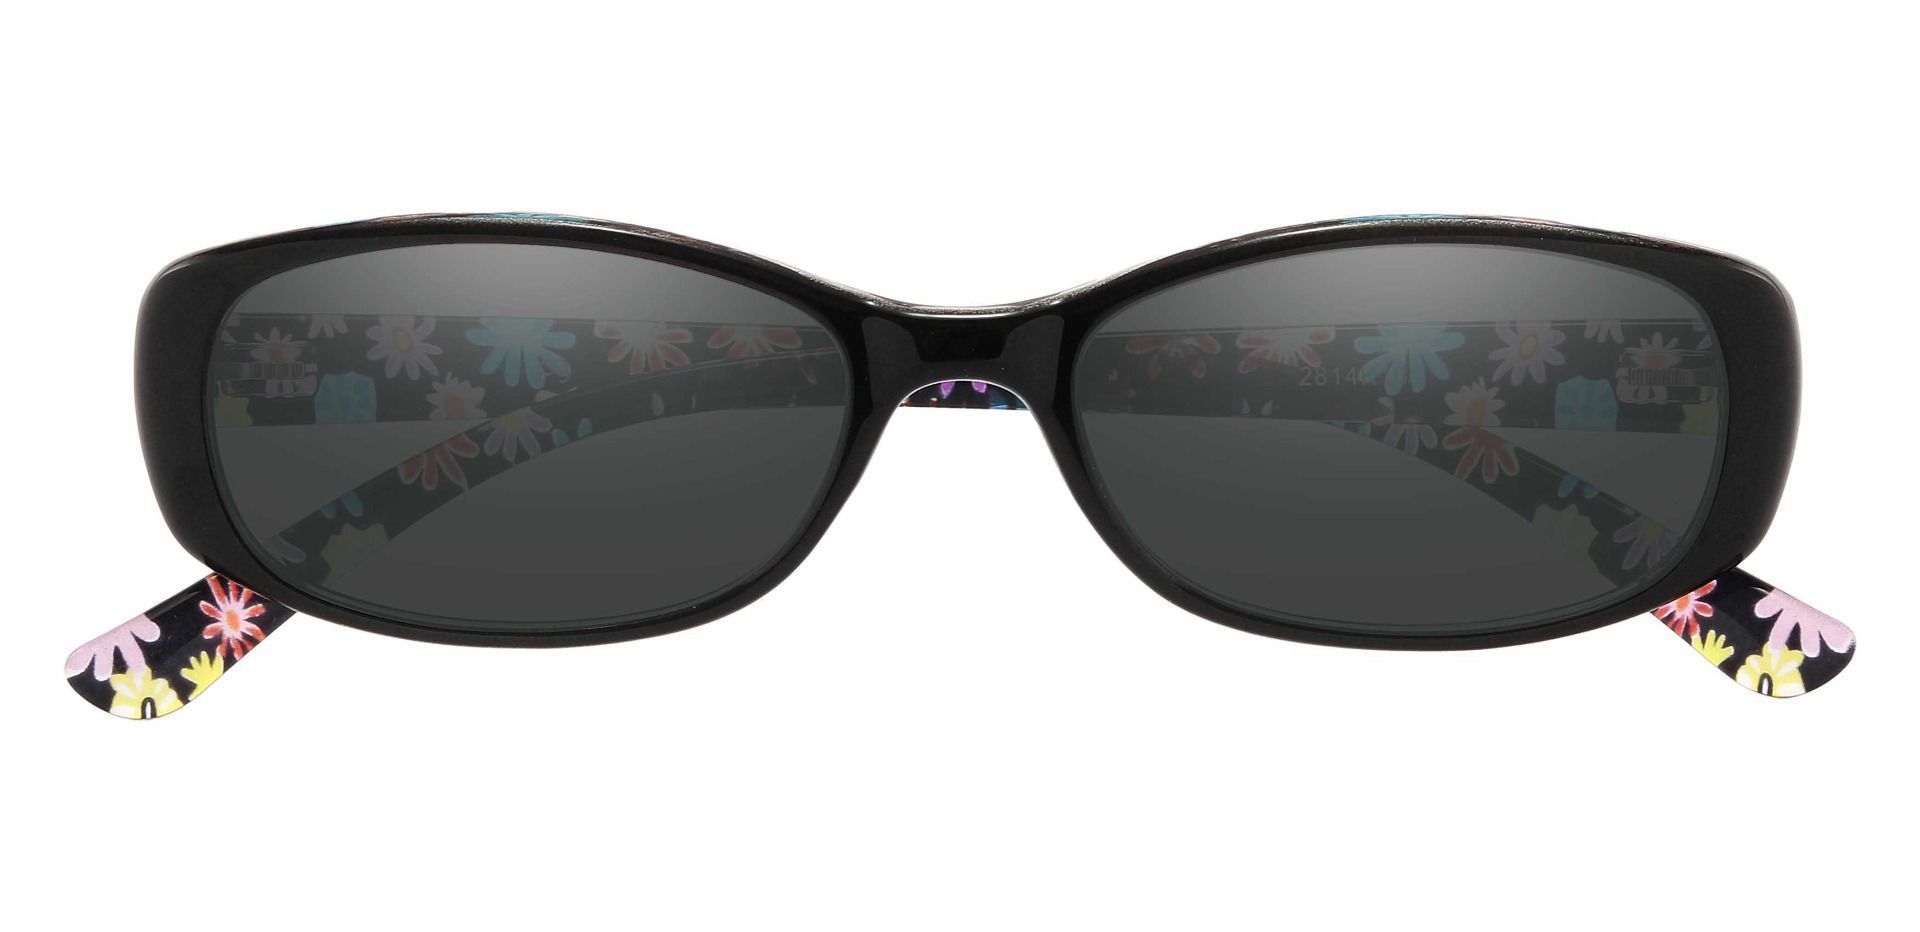 Bethesda Rectangle Lined Bifocal Sunglasses - Black Frame With Gray Lenses